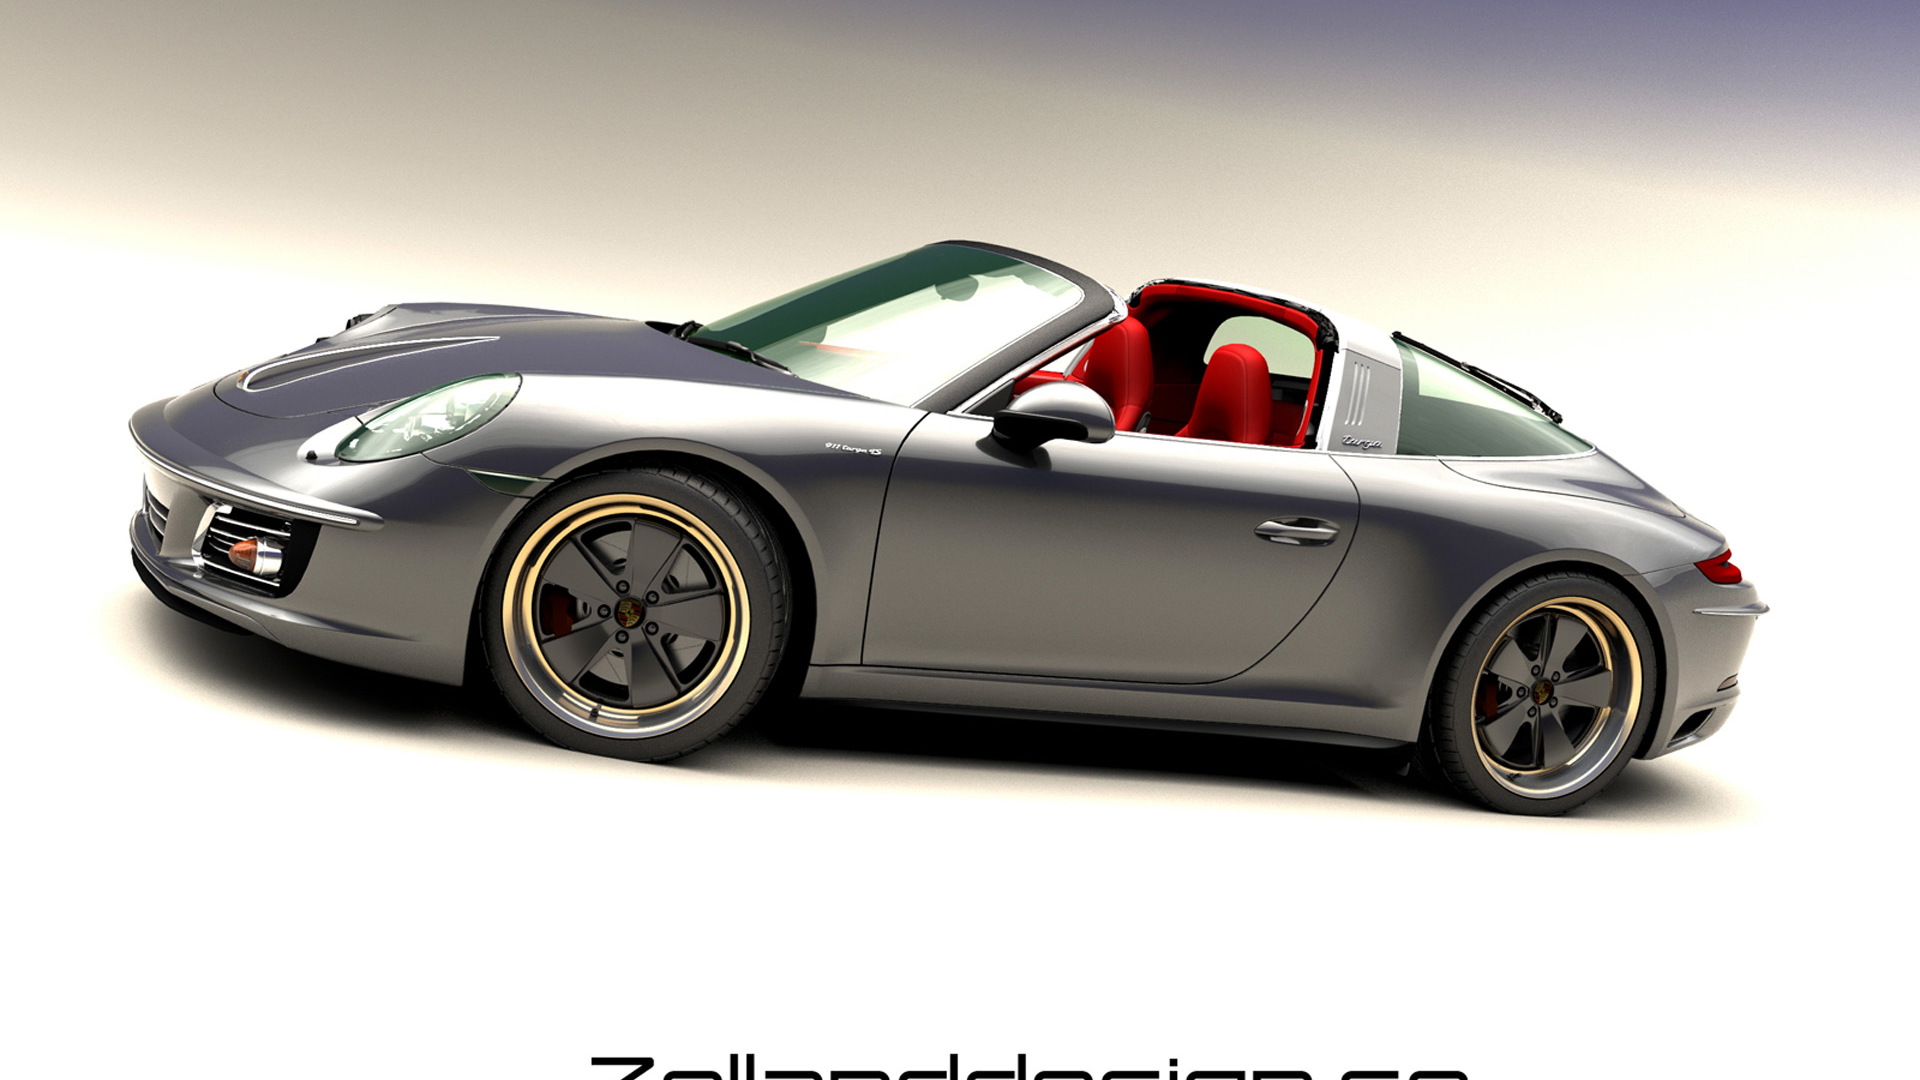 Zolland Design retro conversion for the 991-series Porsche 911